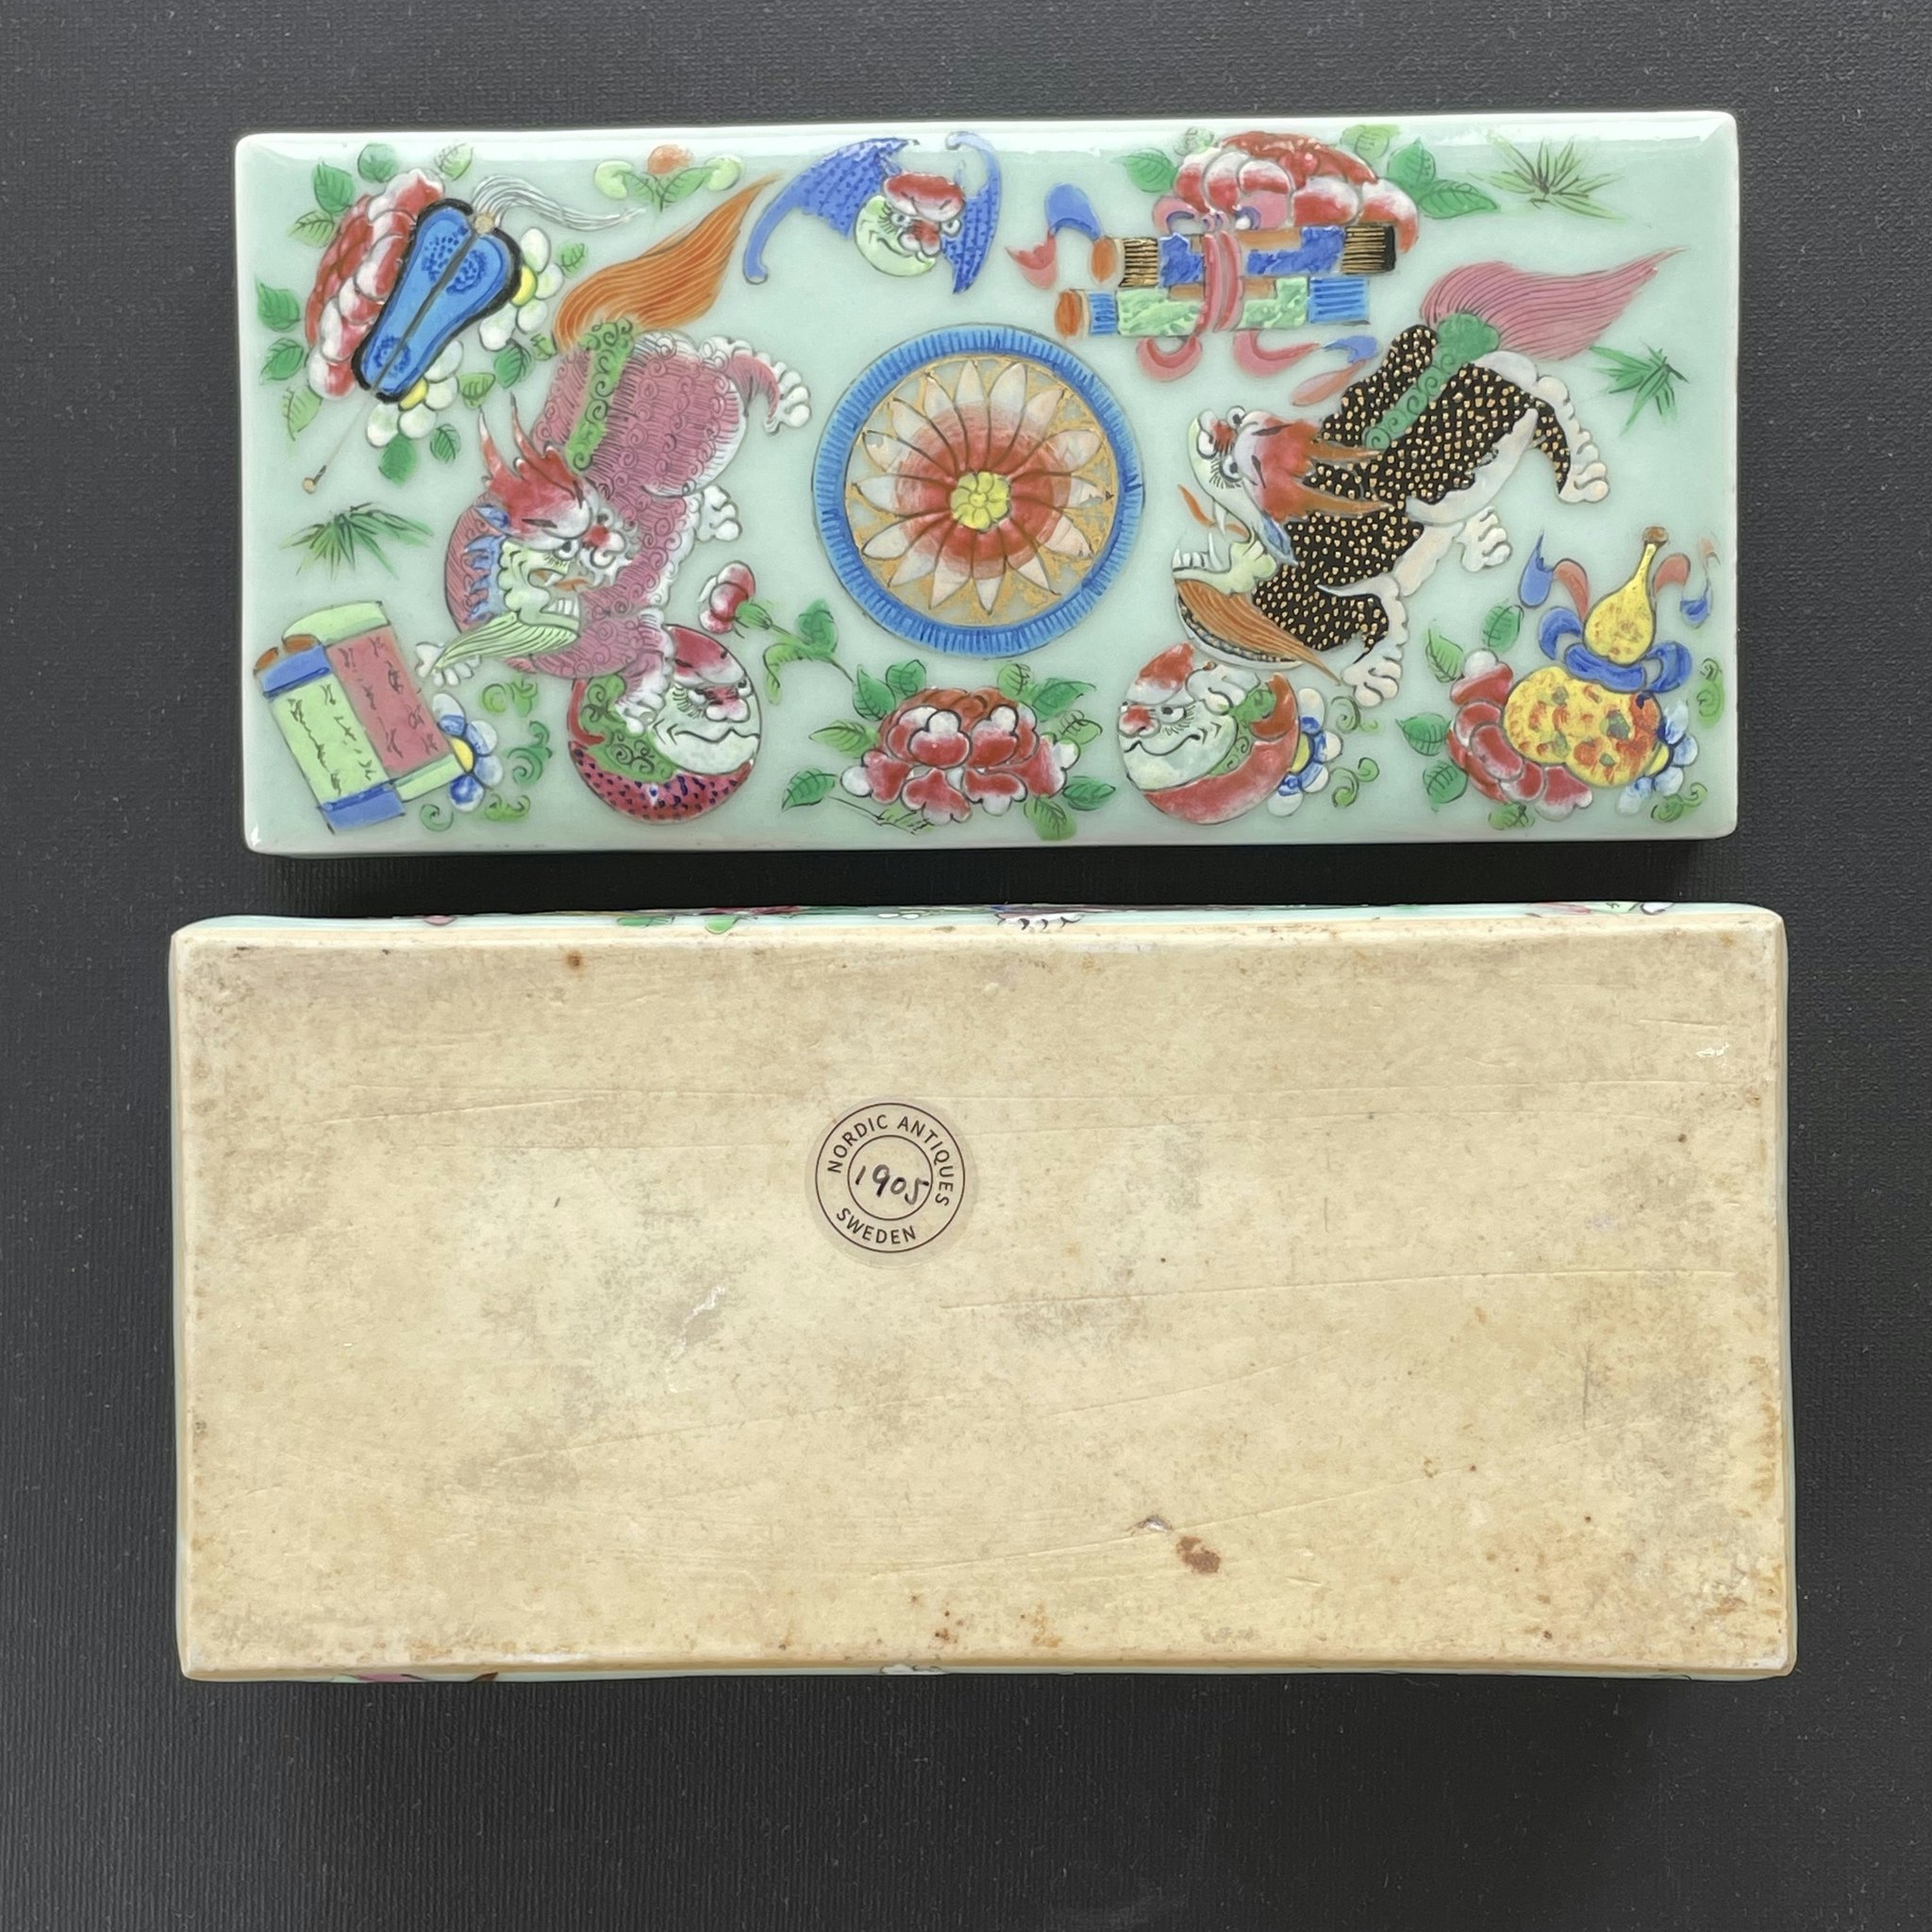 Chinese Antique Porcelain Brush / Pencil box 19 C #1905